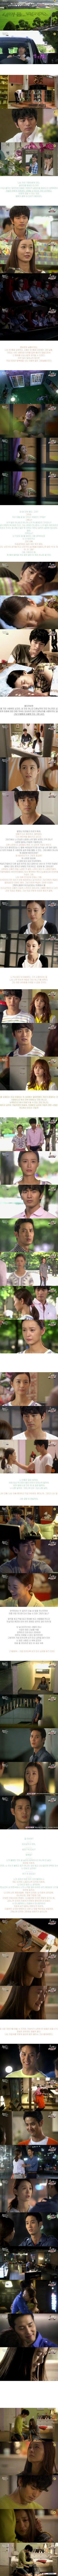 episode 15 captures for the Korean drama 'I Need Romance 2012'